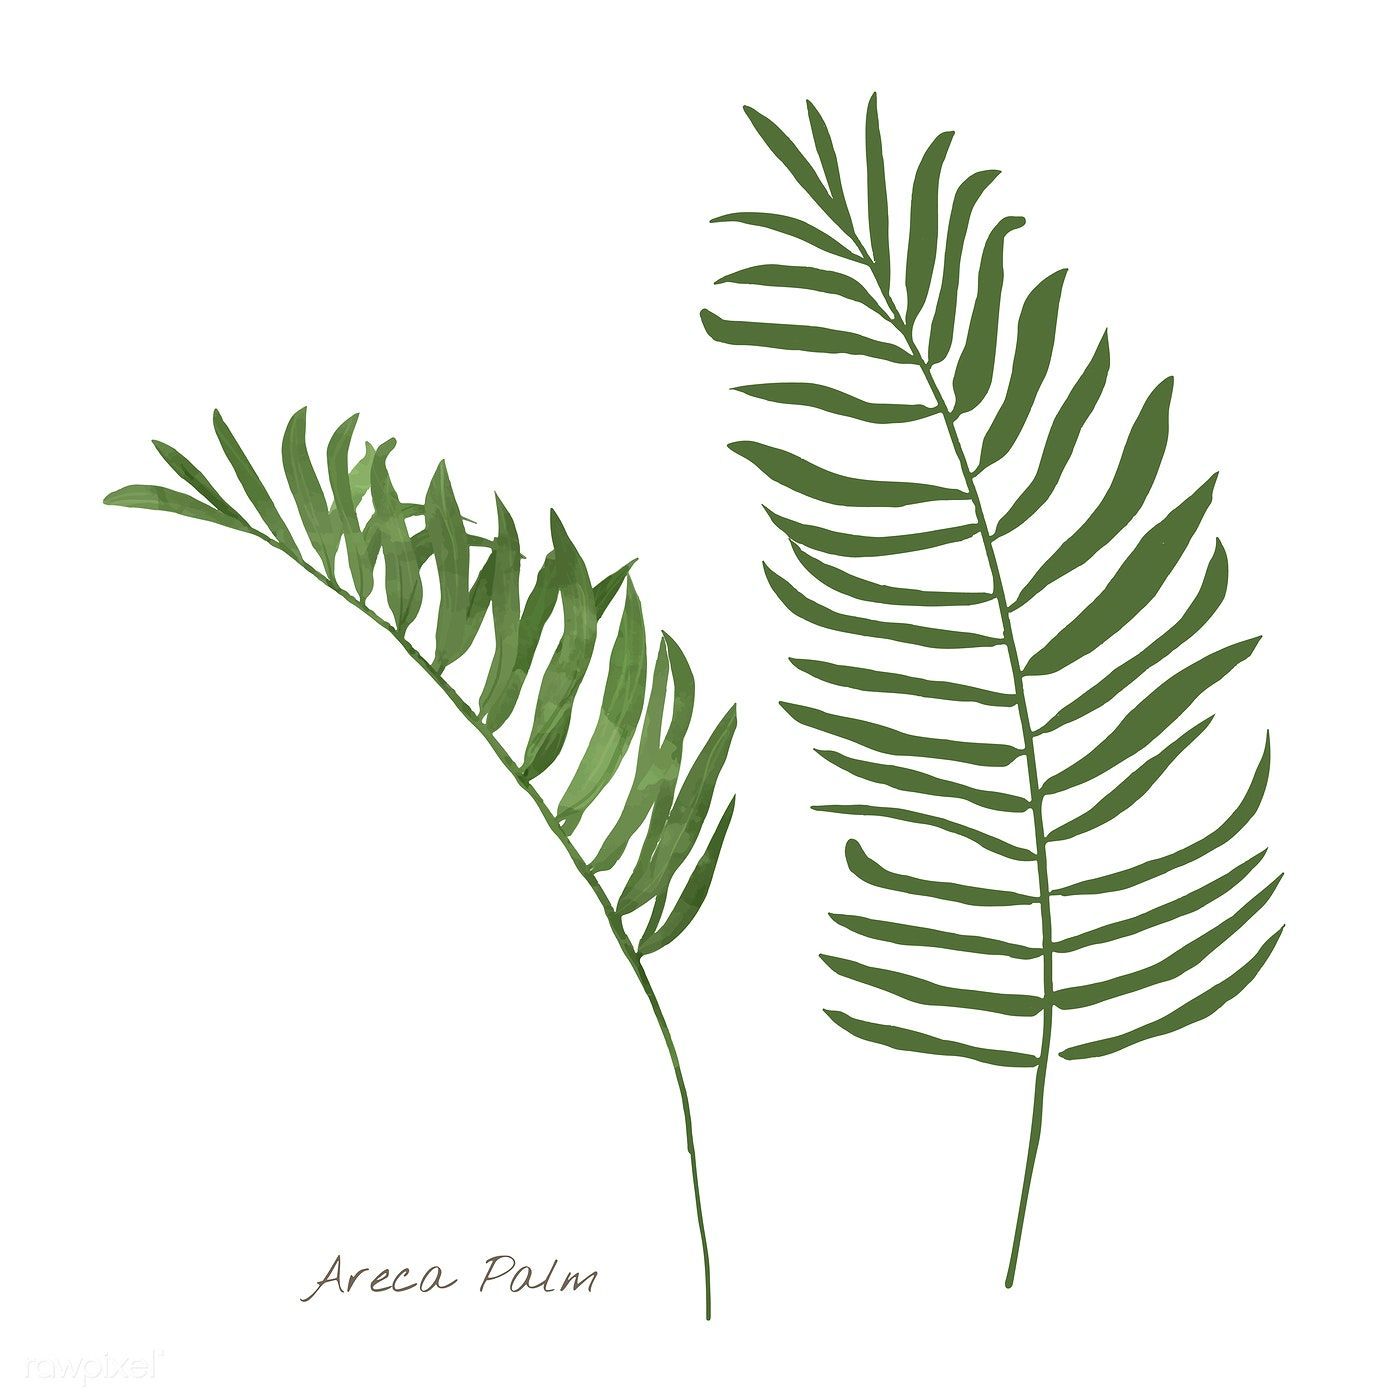 11 palm plants Illustration ideas